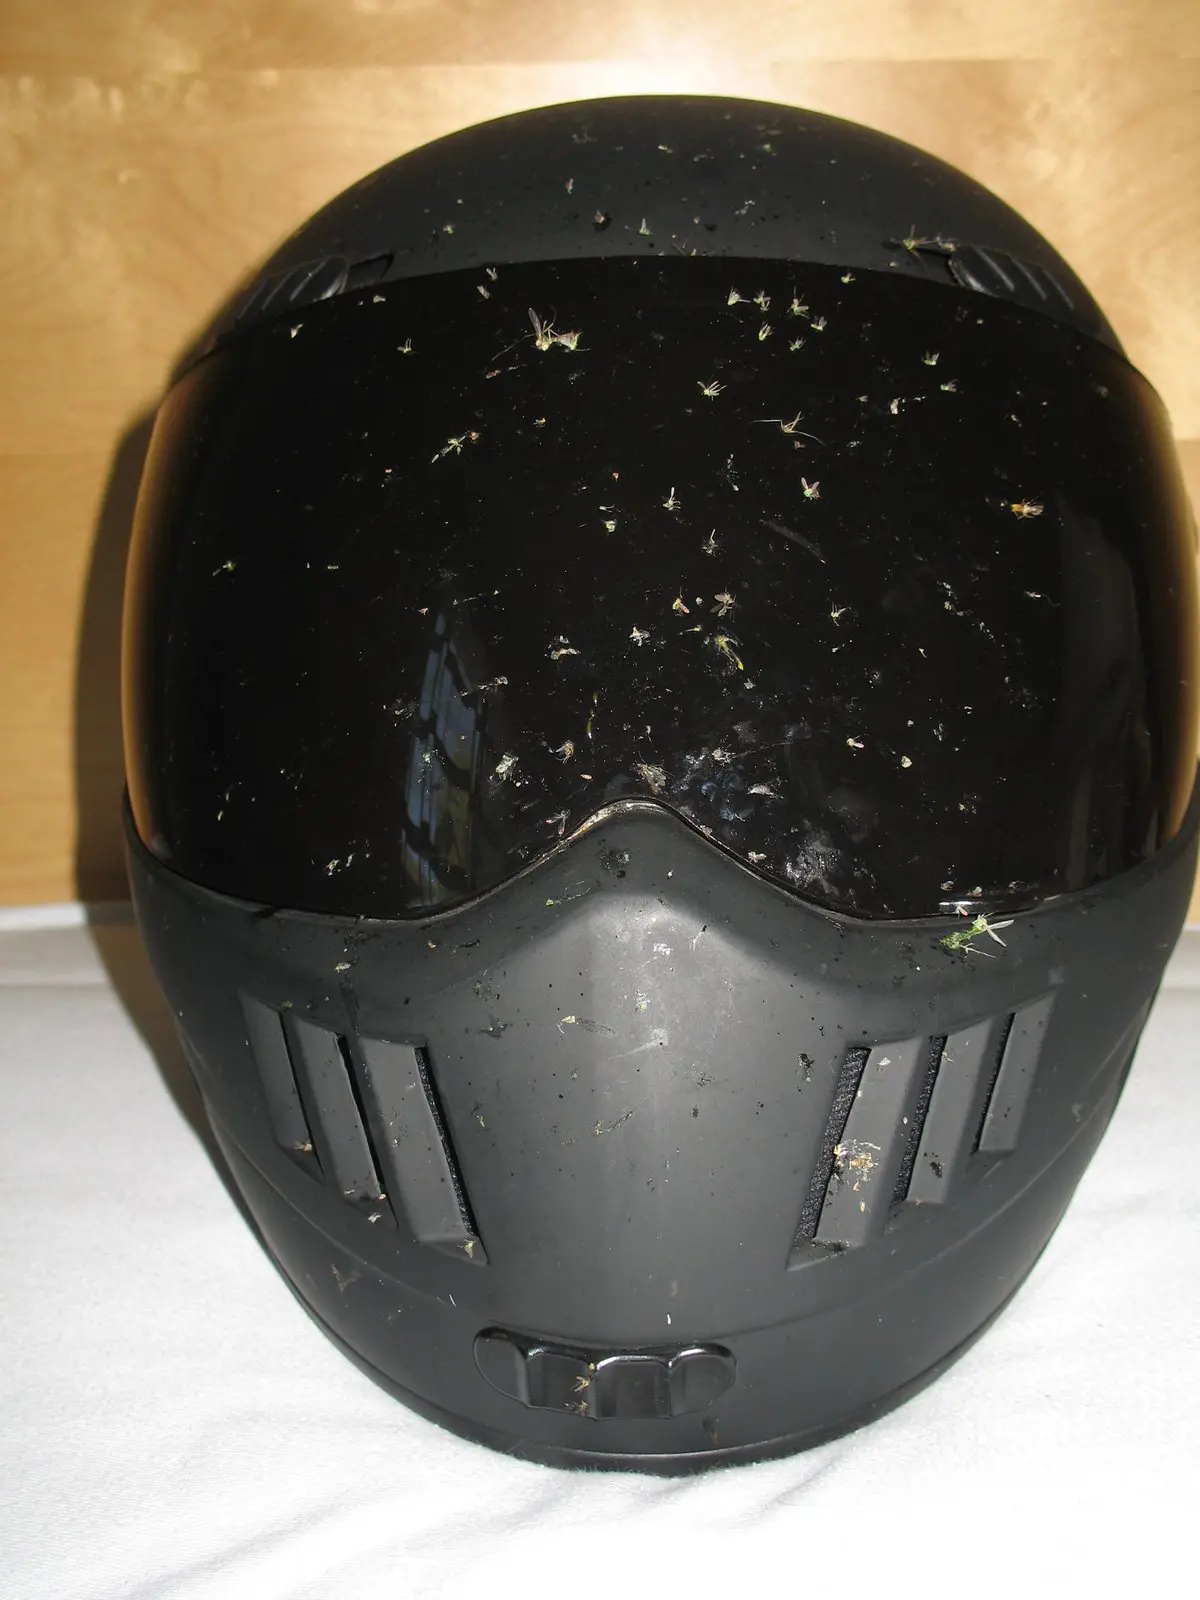 Streetfighter helmet